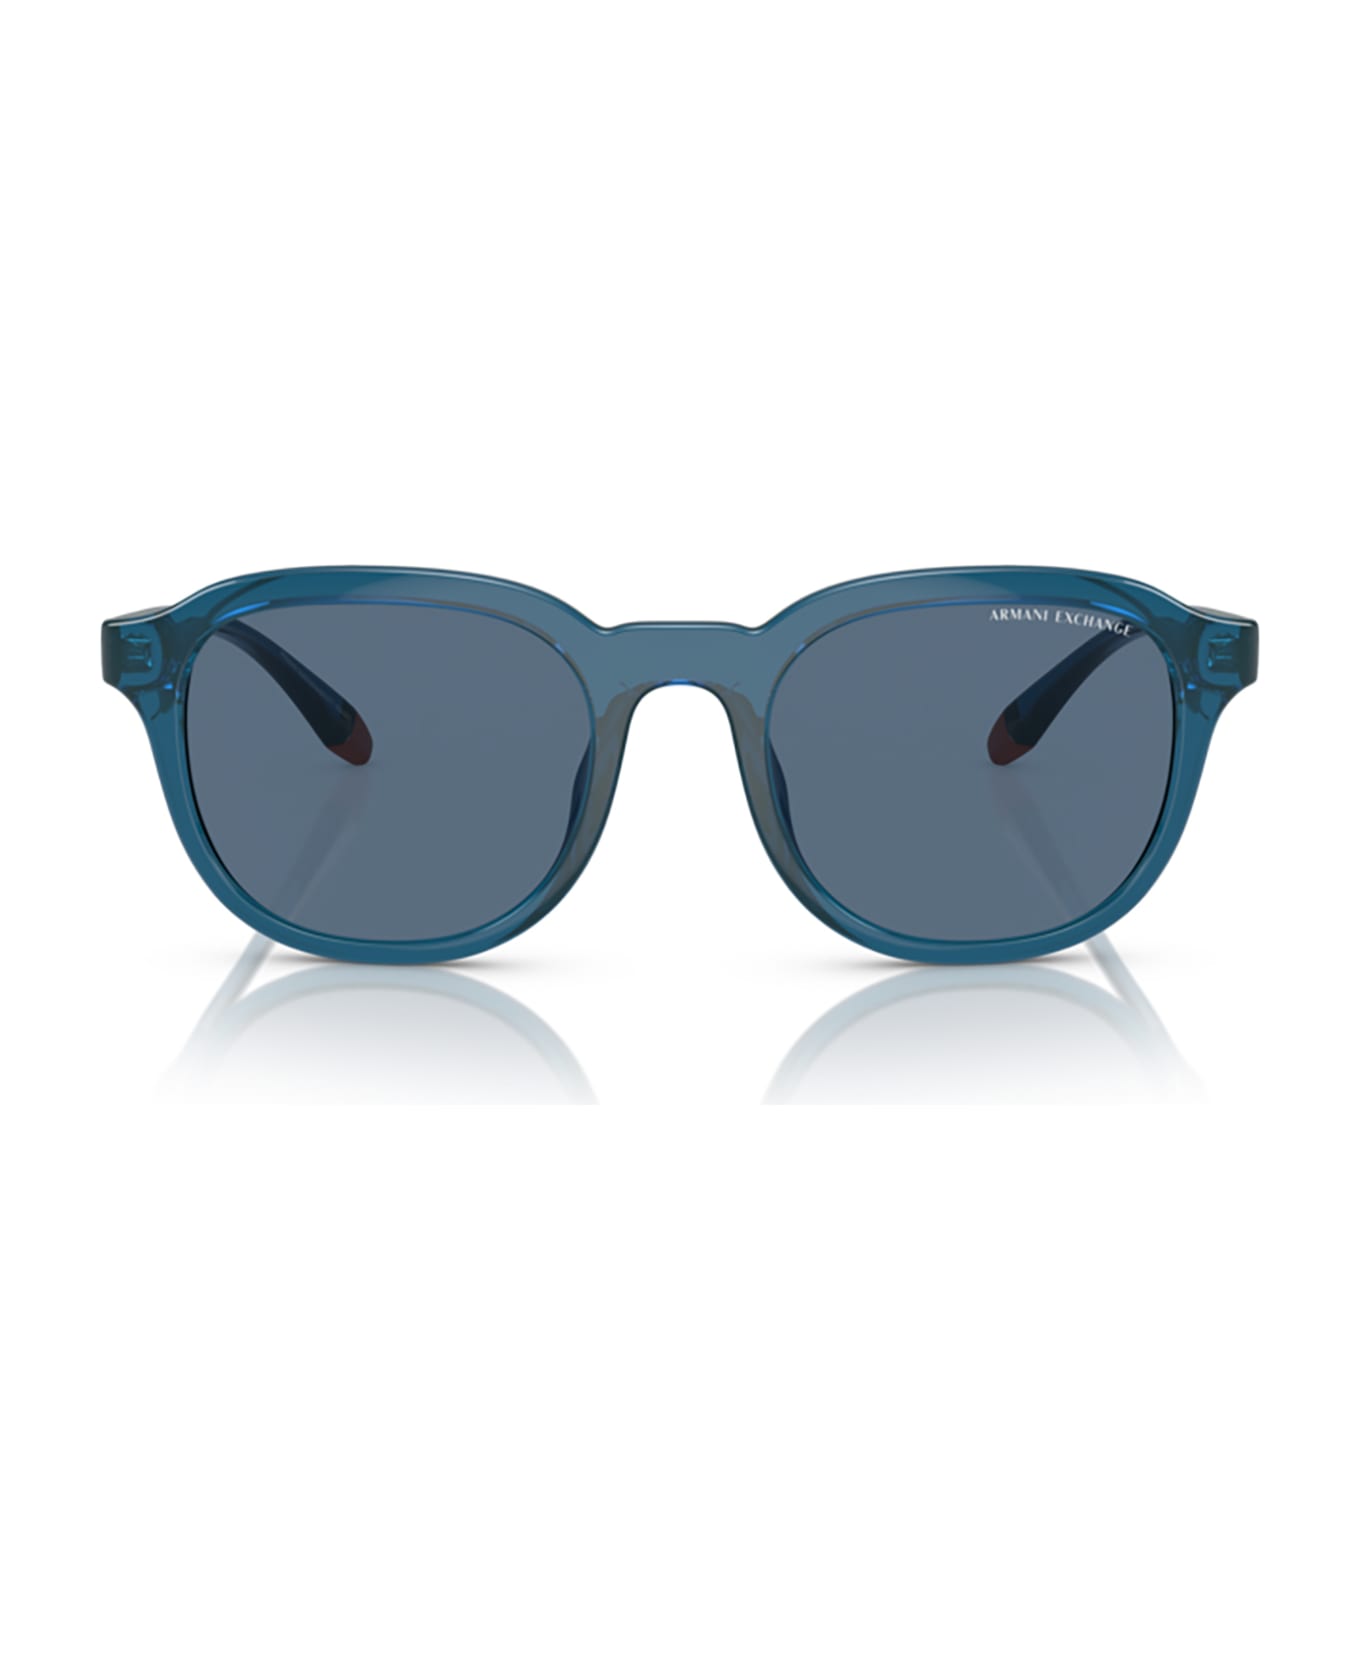 Armani Exchange Ax4129su Shiny Transparent Blue Sunglasses - Shiny Transparent Blue